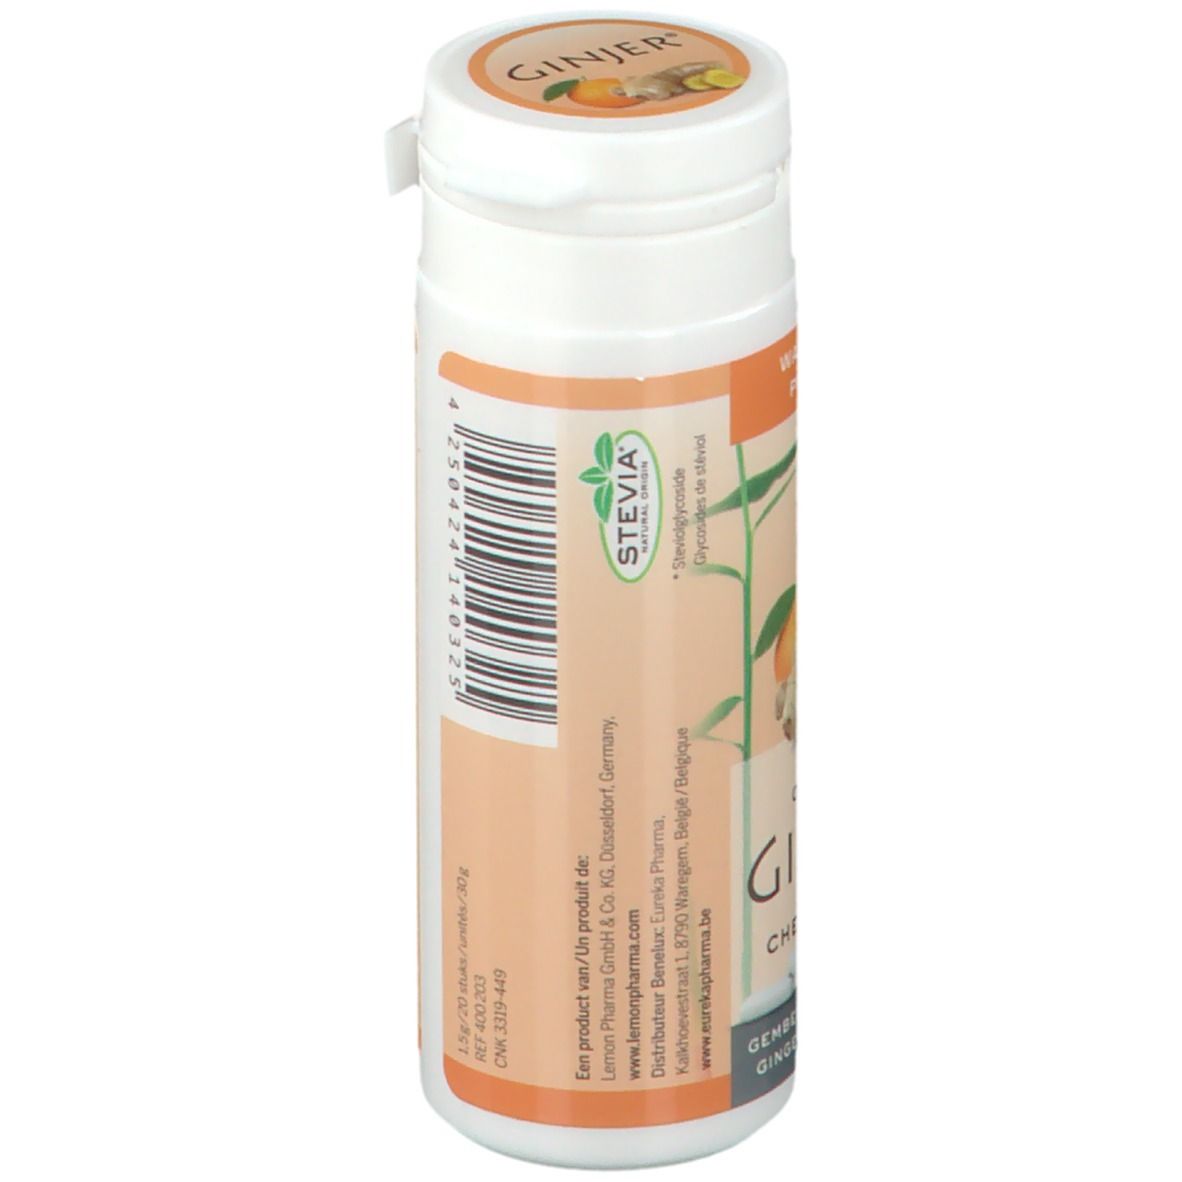 Ginjer® Original Xylitol Chewing-Gum Orange-Gingembre